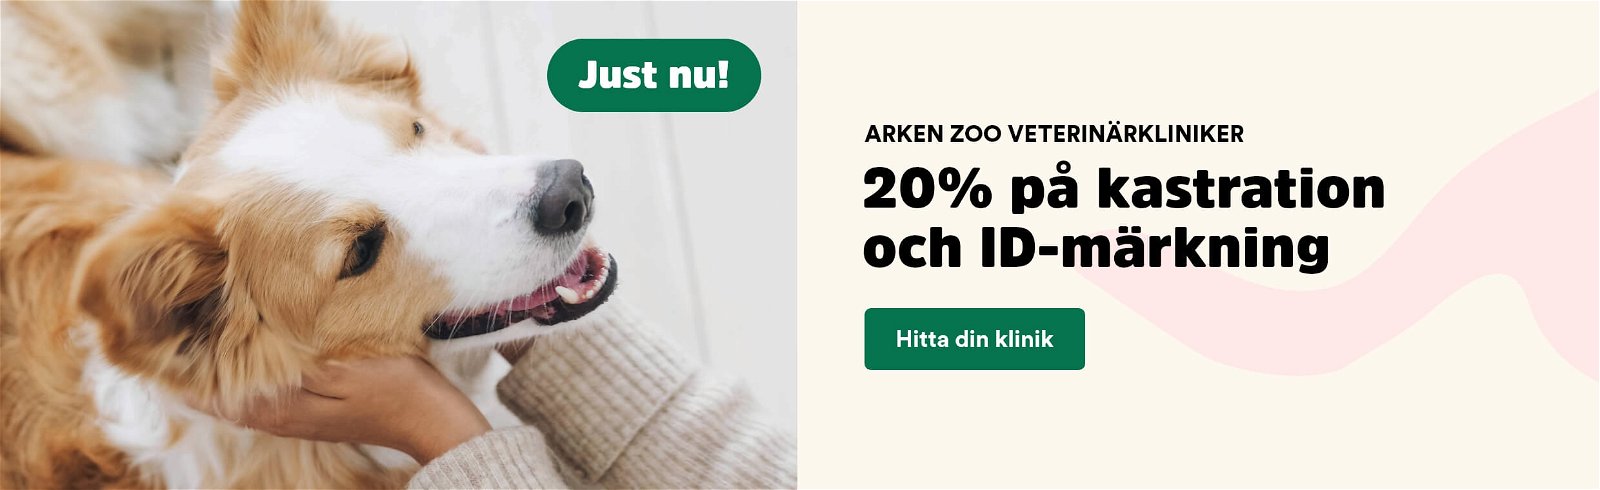 Arken Zoo Veterinärklinik kampanj